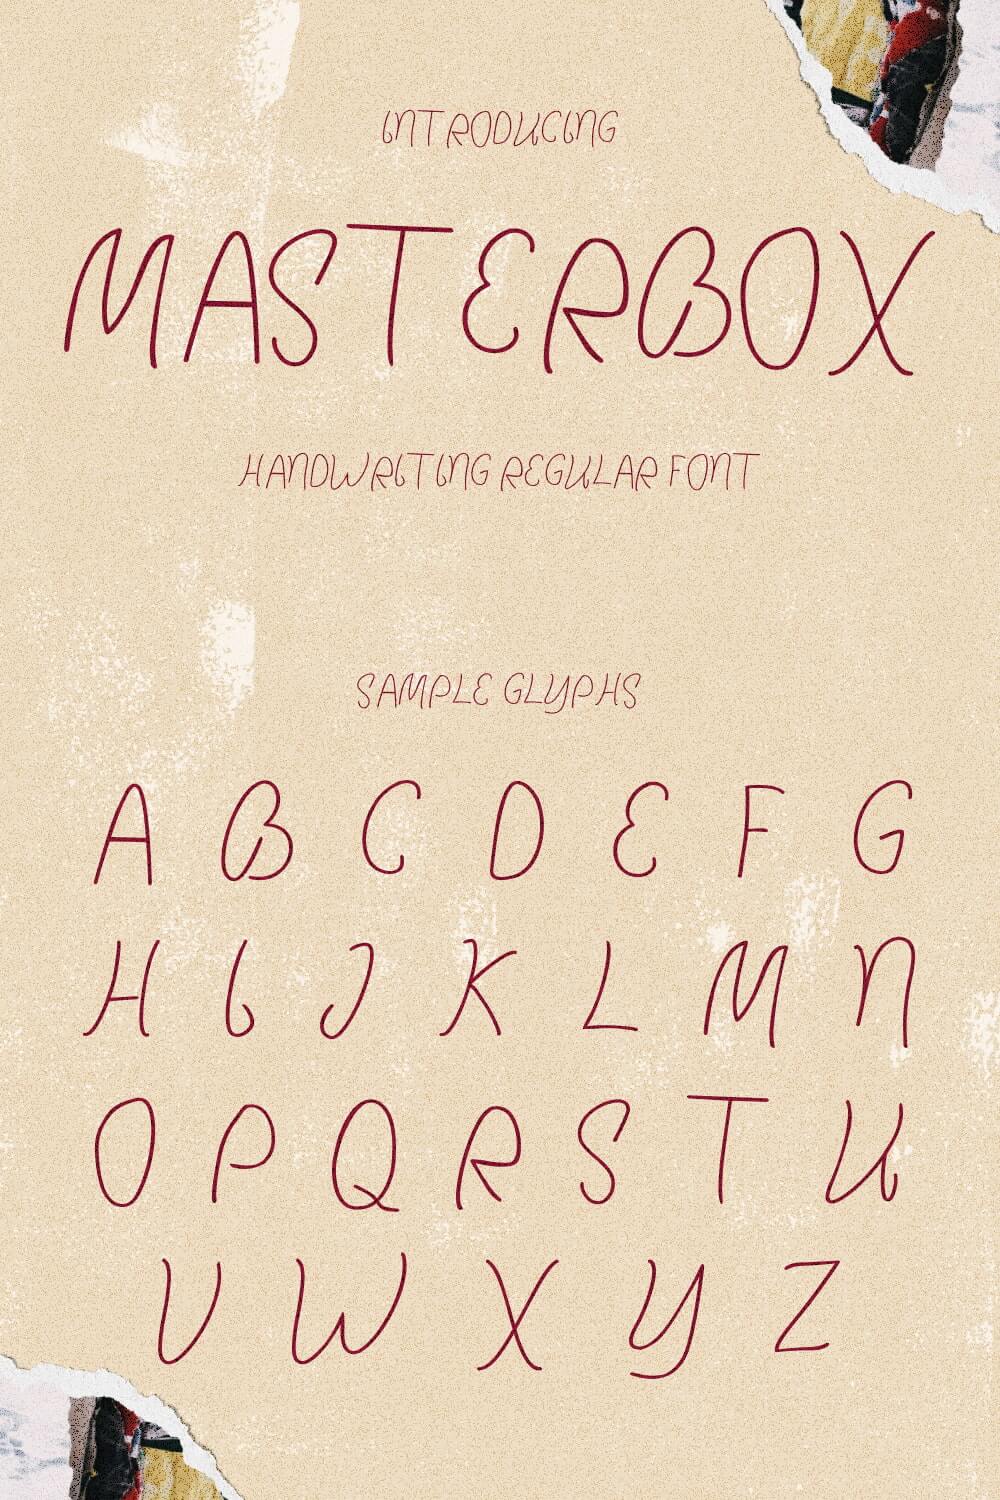 MasterBox Handwriting Regular Font cover image.